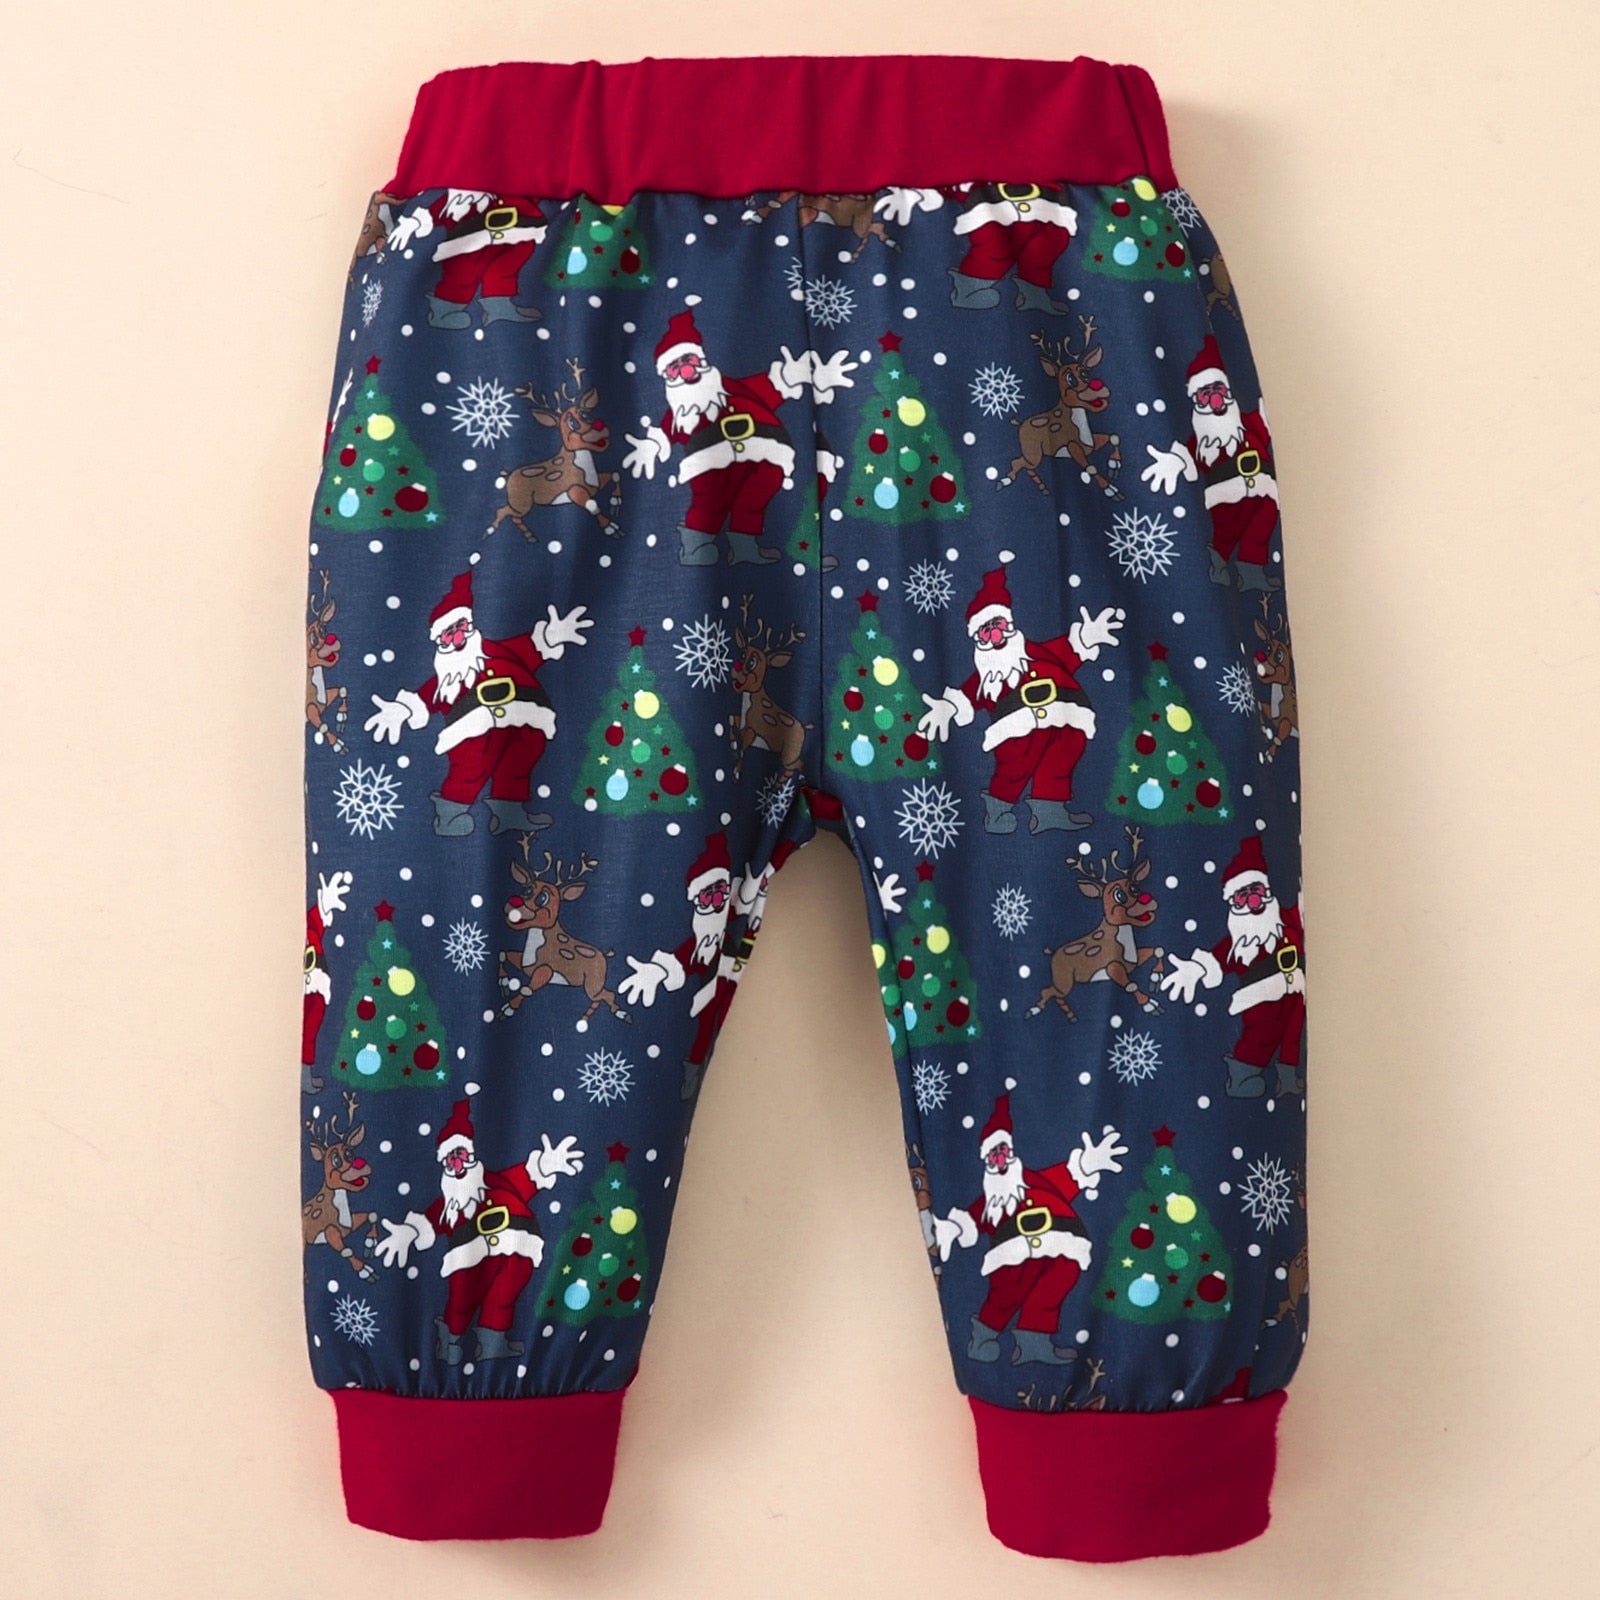 Infant Boys Girls Winter Long Sleeve Christmas Santa Cartoon Prints Romper Pants Hat Outfit